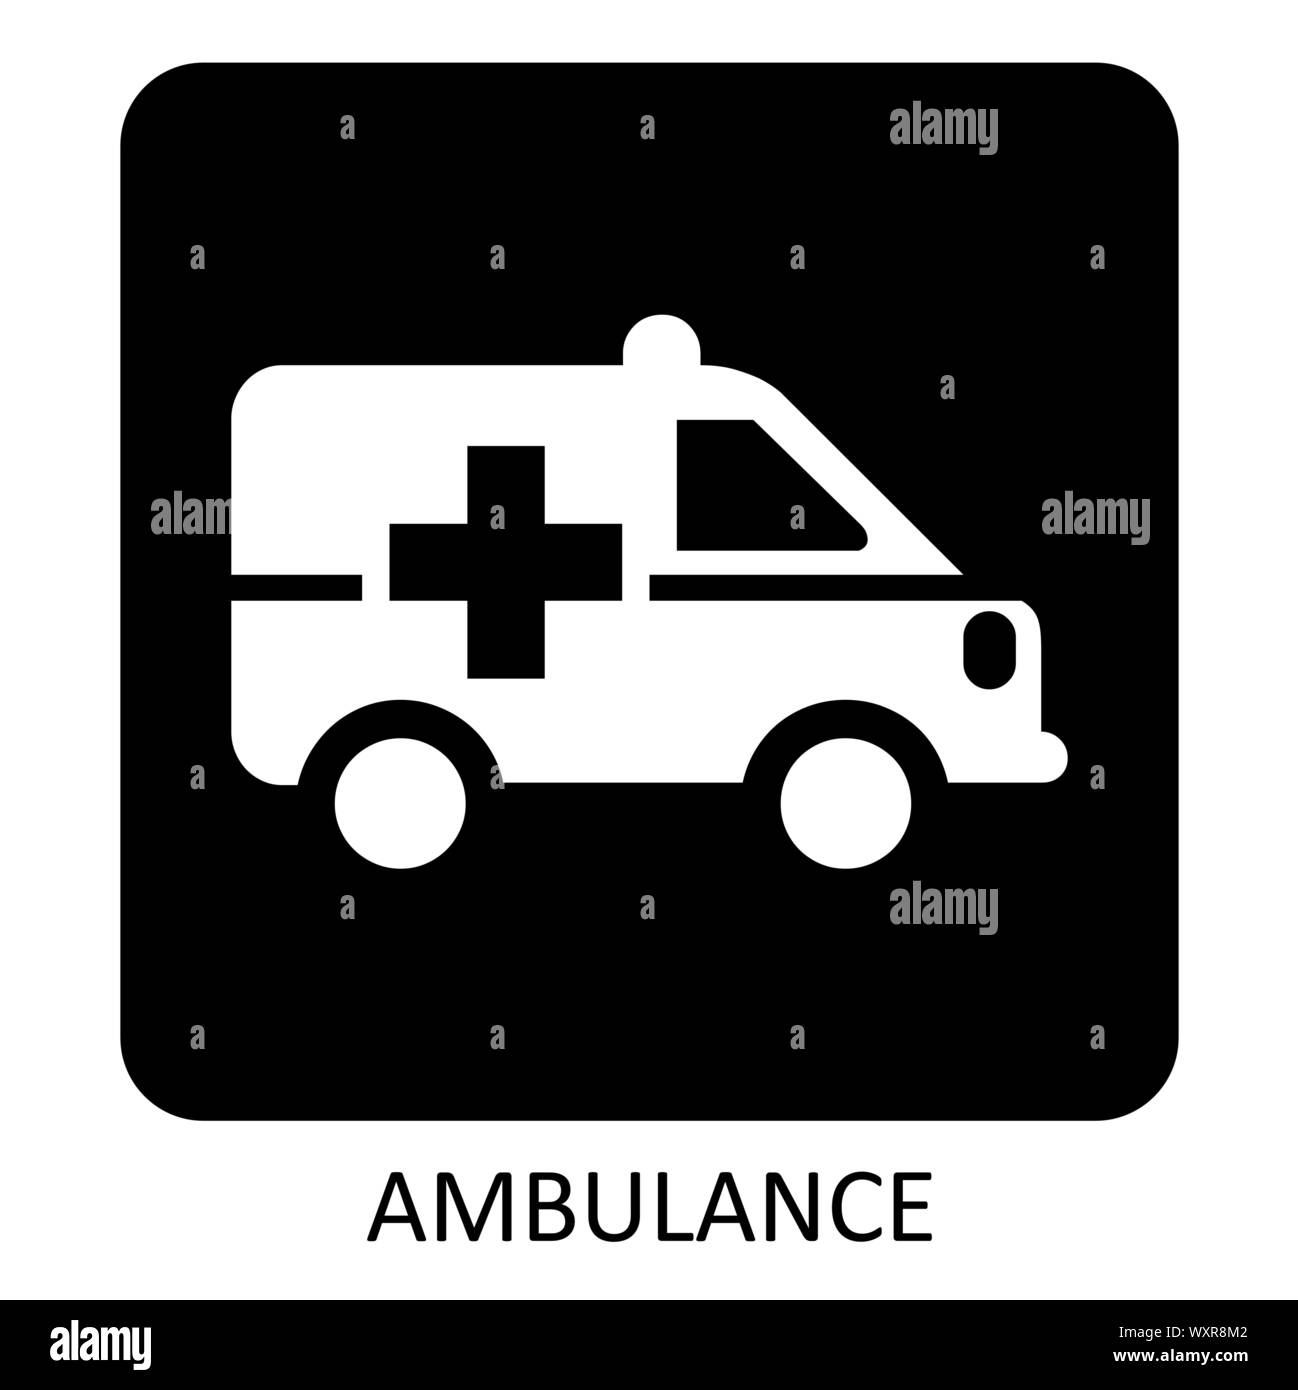 Ambulance icon illustration Stock Vector